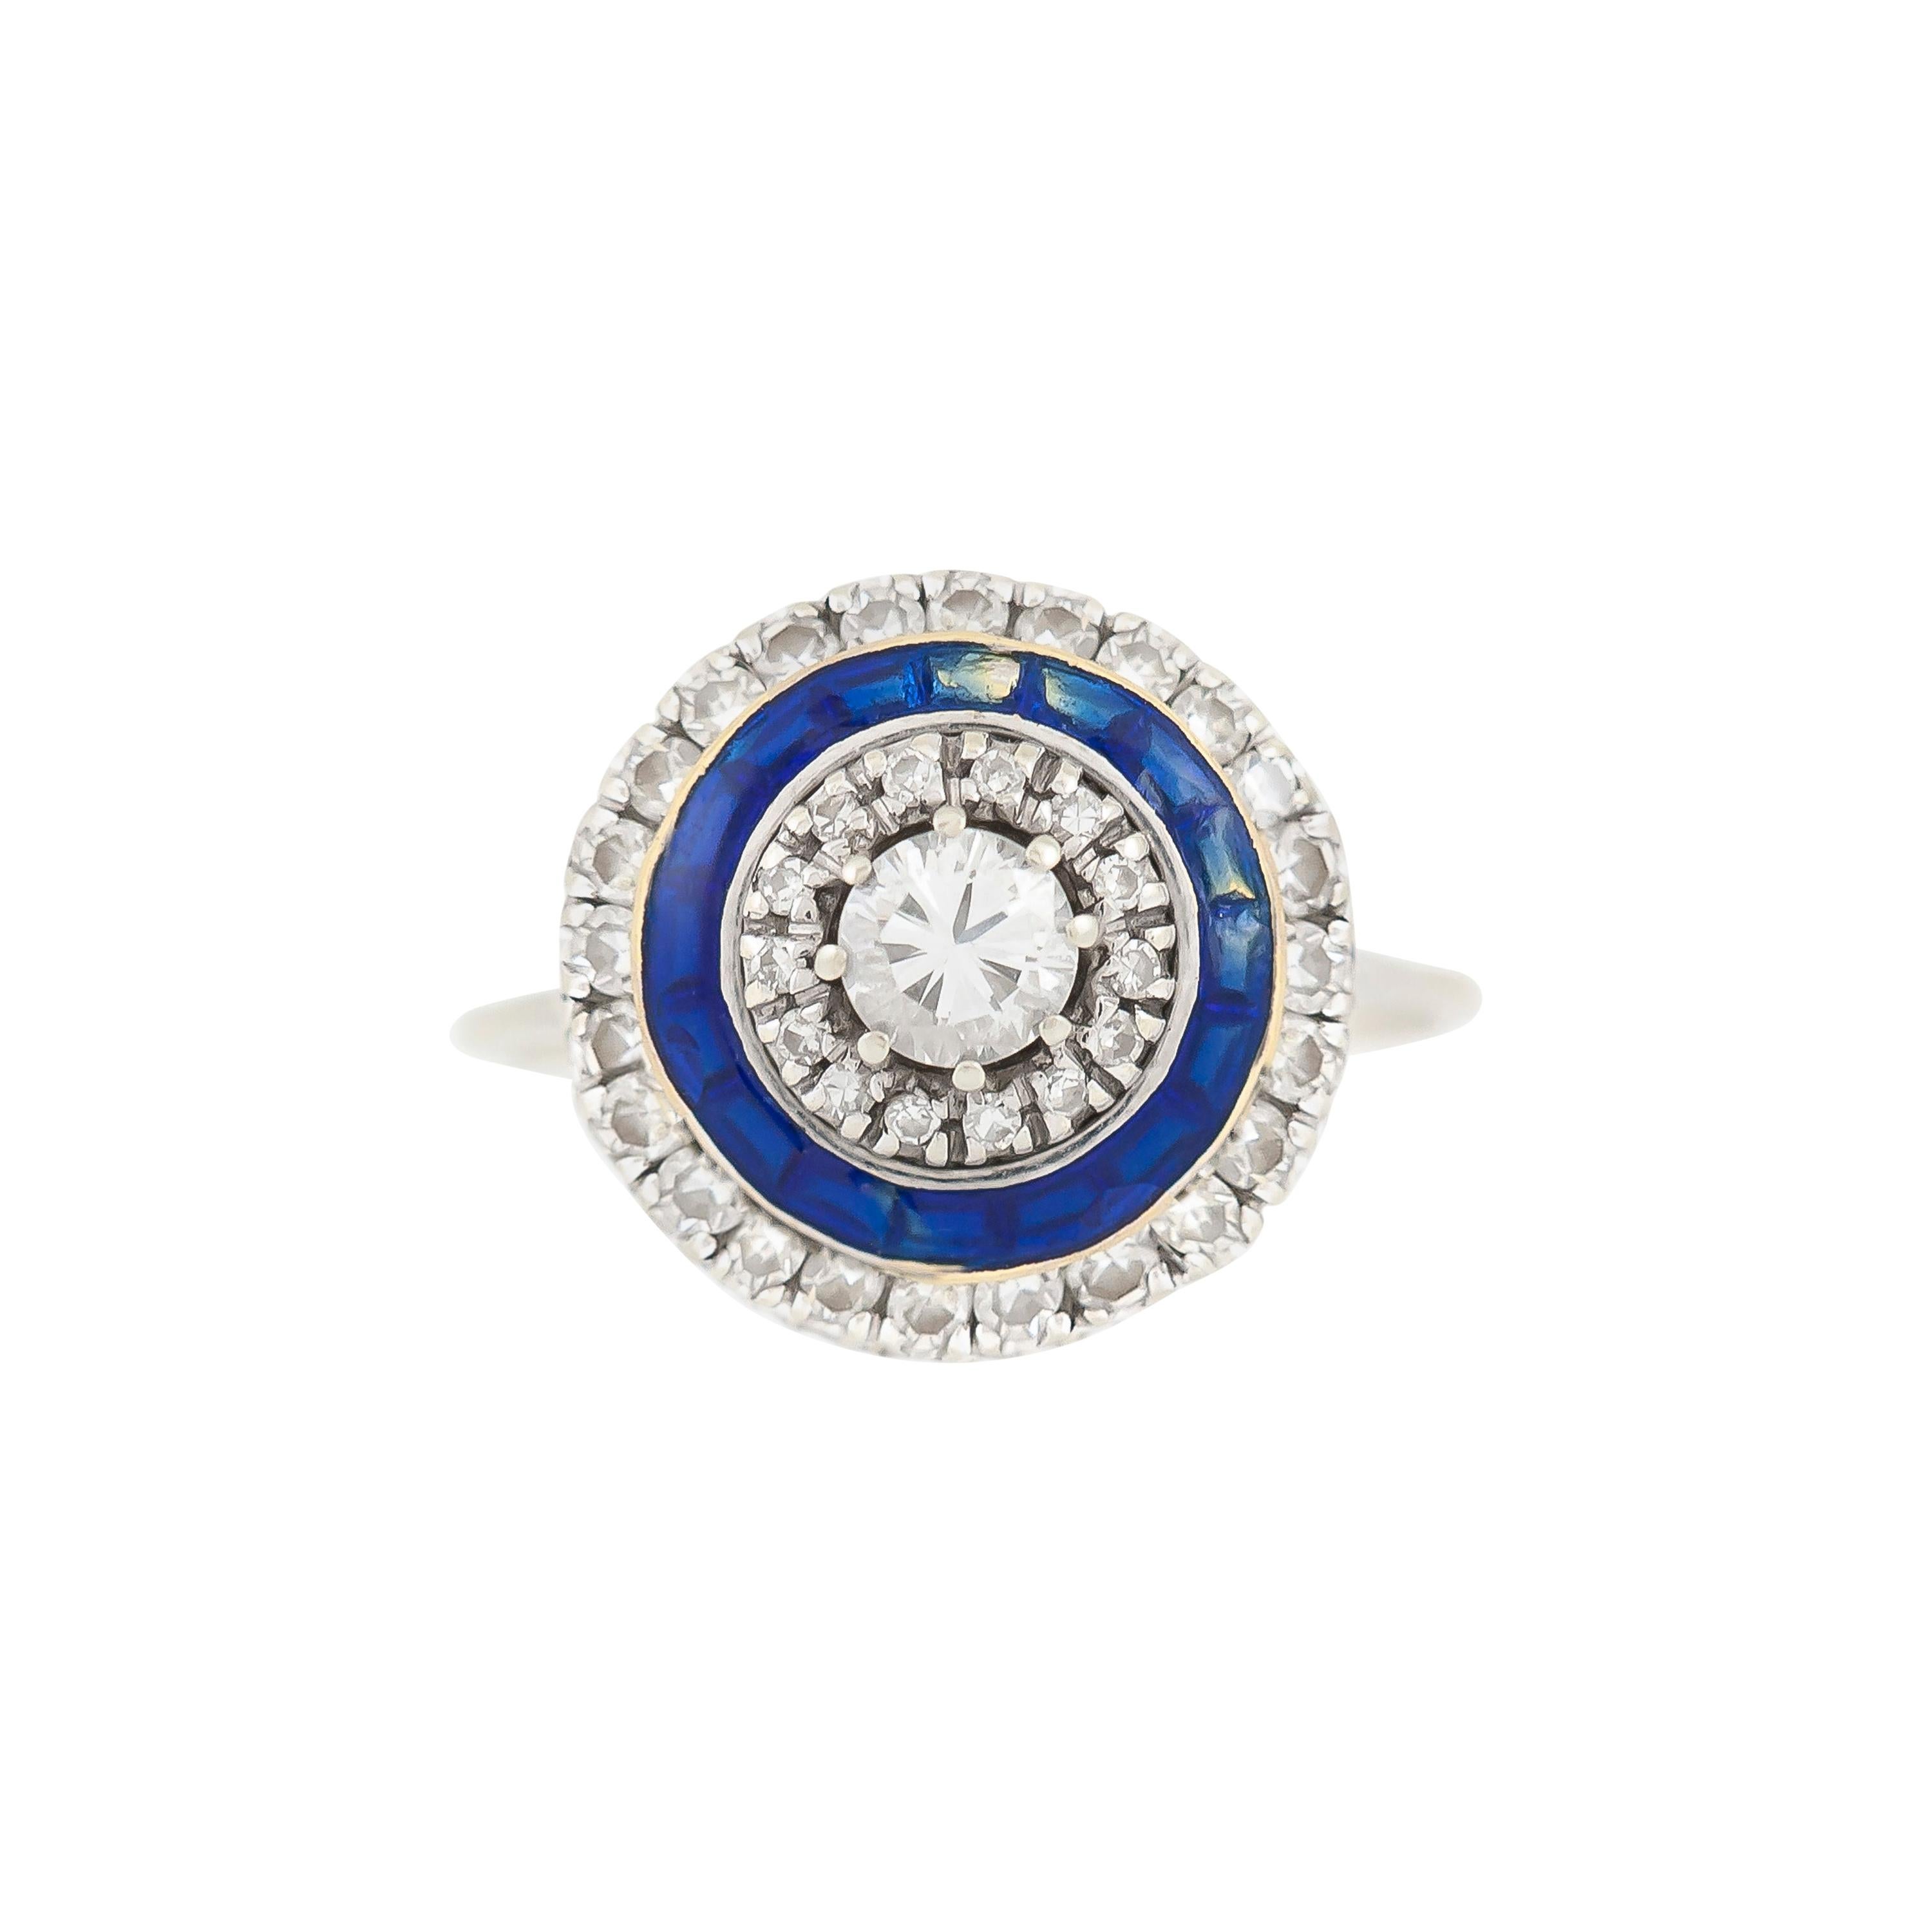 Orbicular Diamonds with Blue Enamel on 18 Karat White Gold Ring